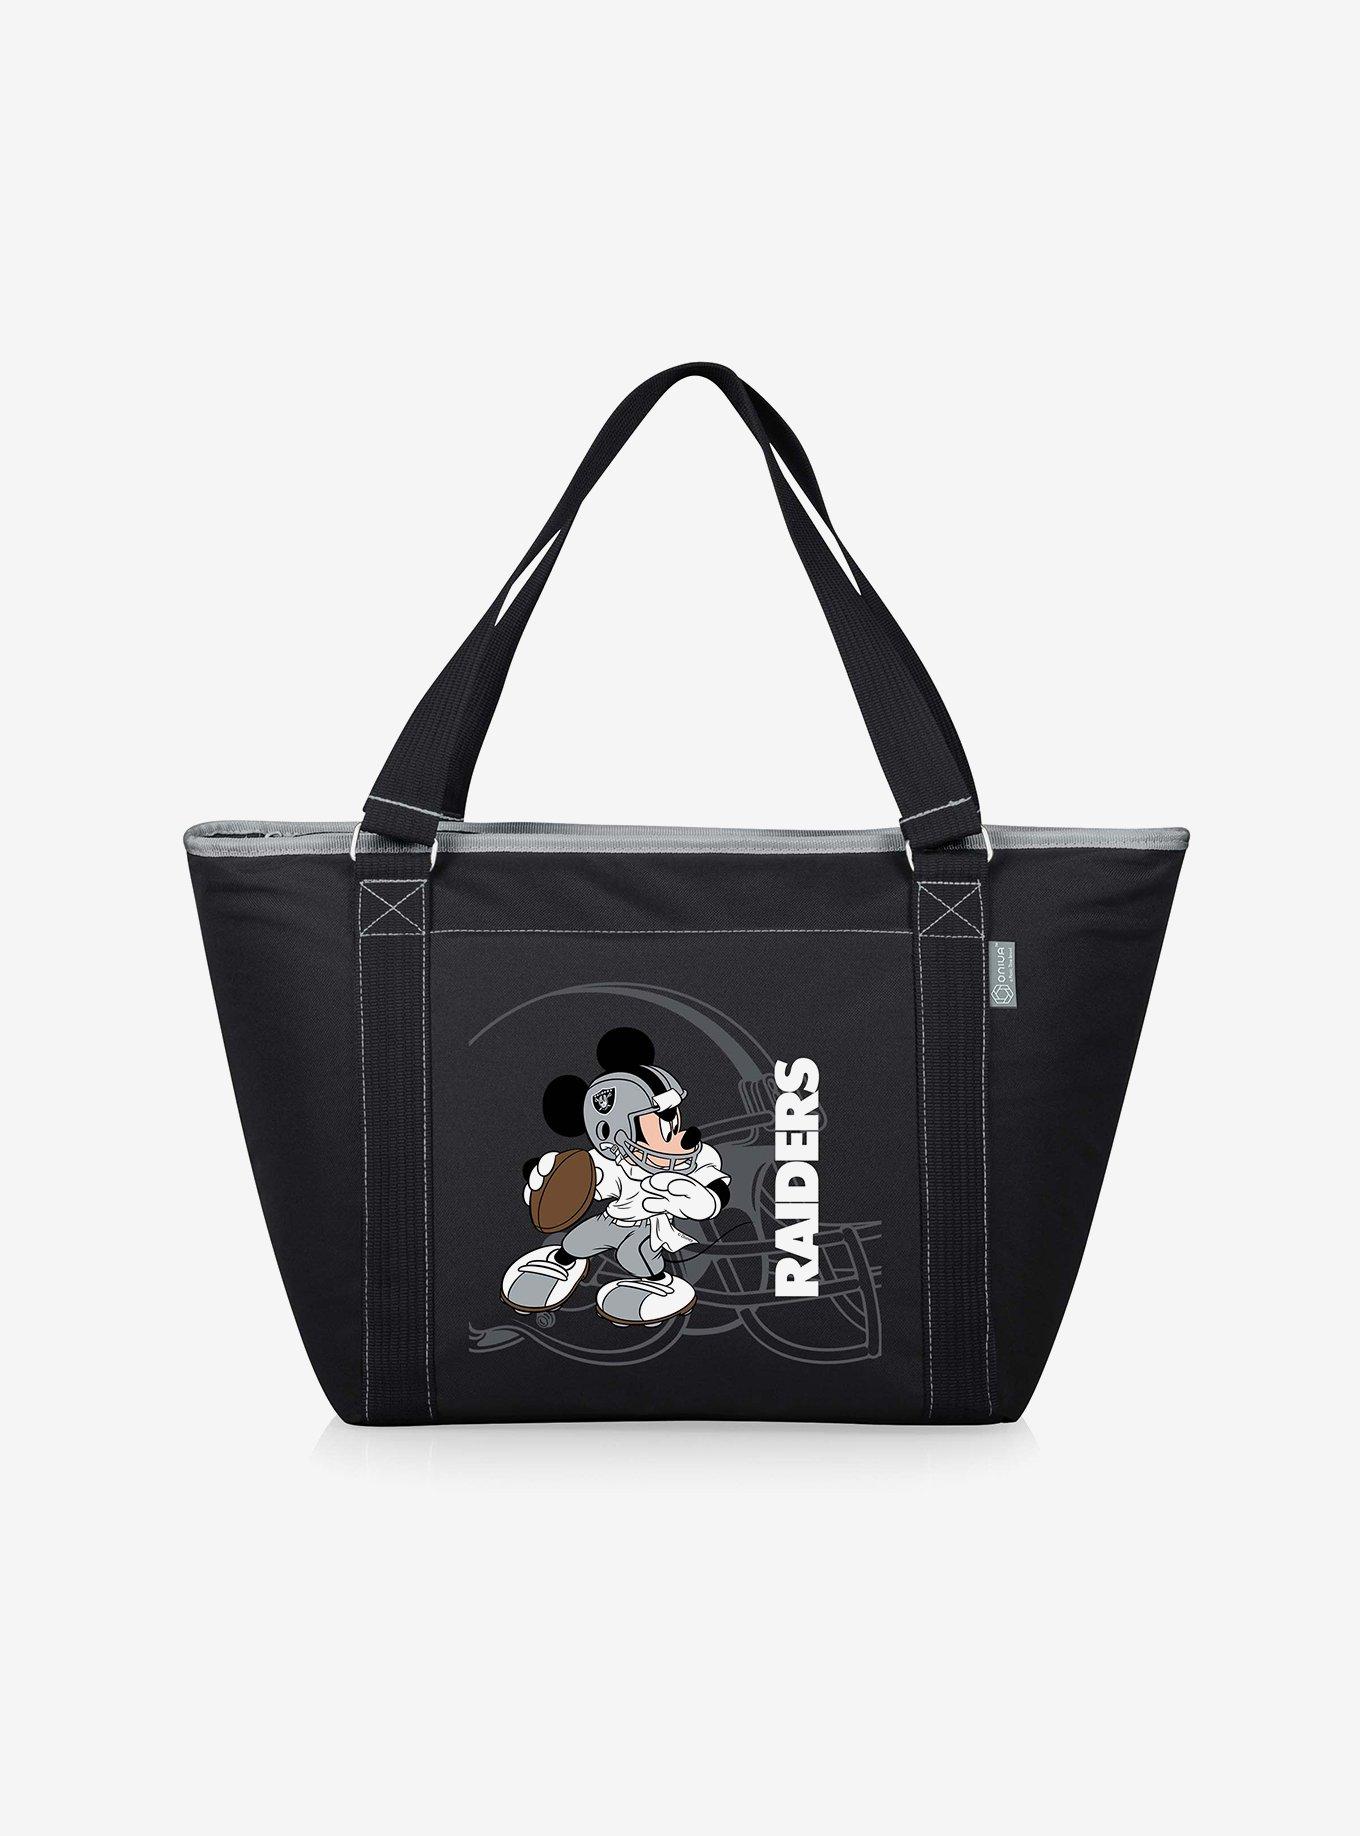 Disney Mickey Mouse NFL Las Vegas Raiders Cooler Backpack